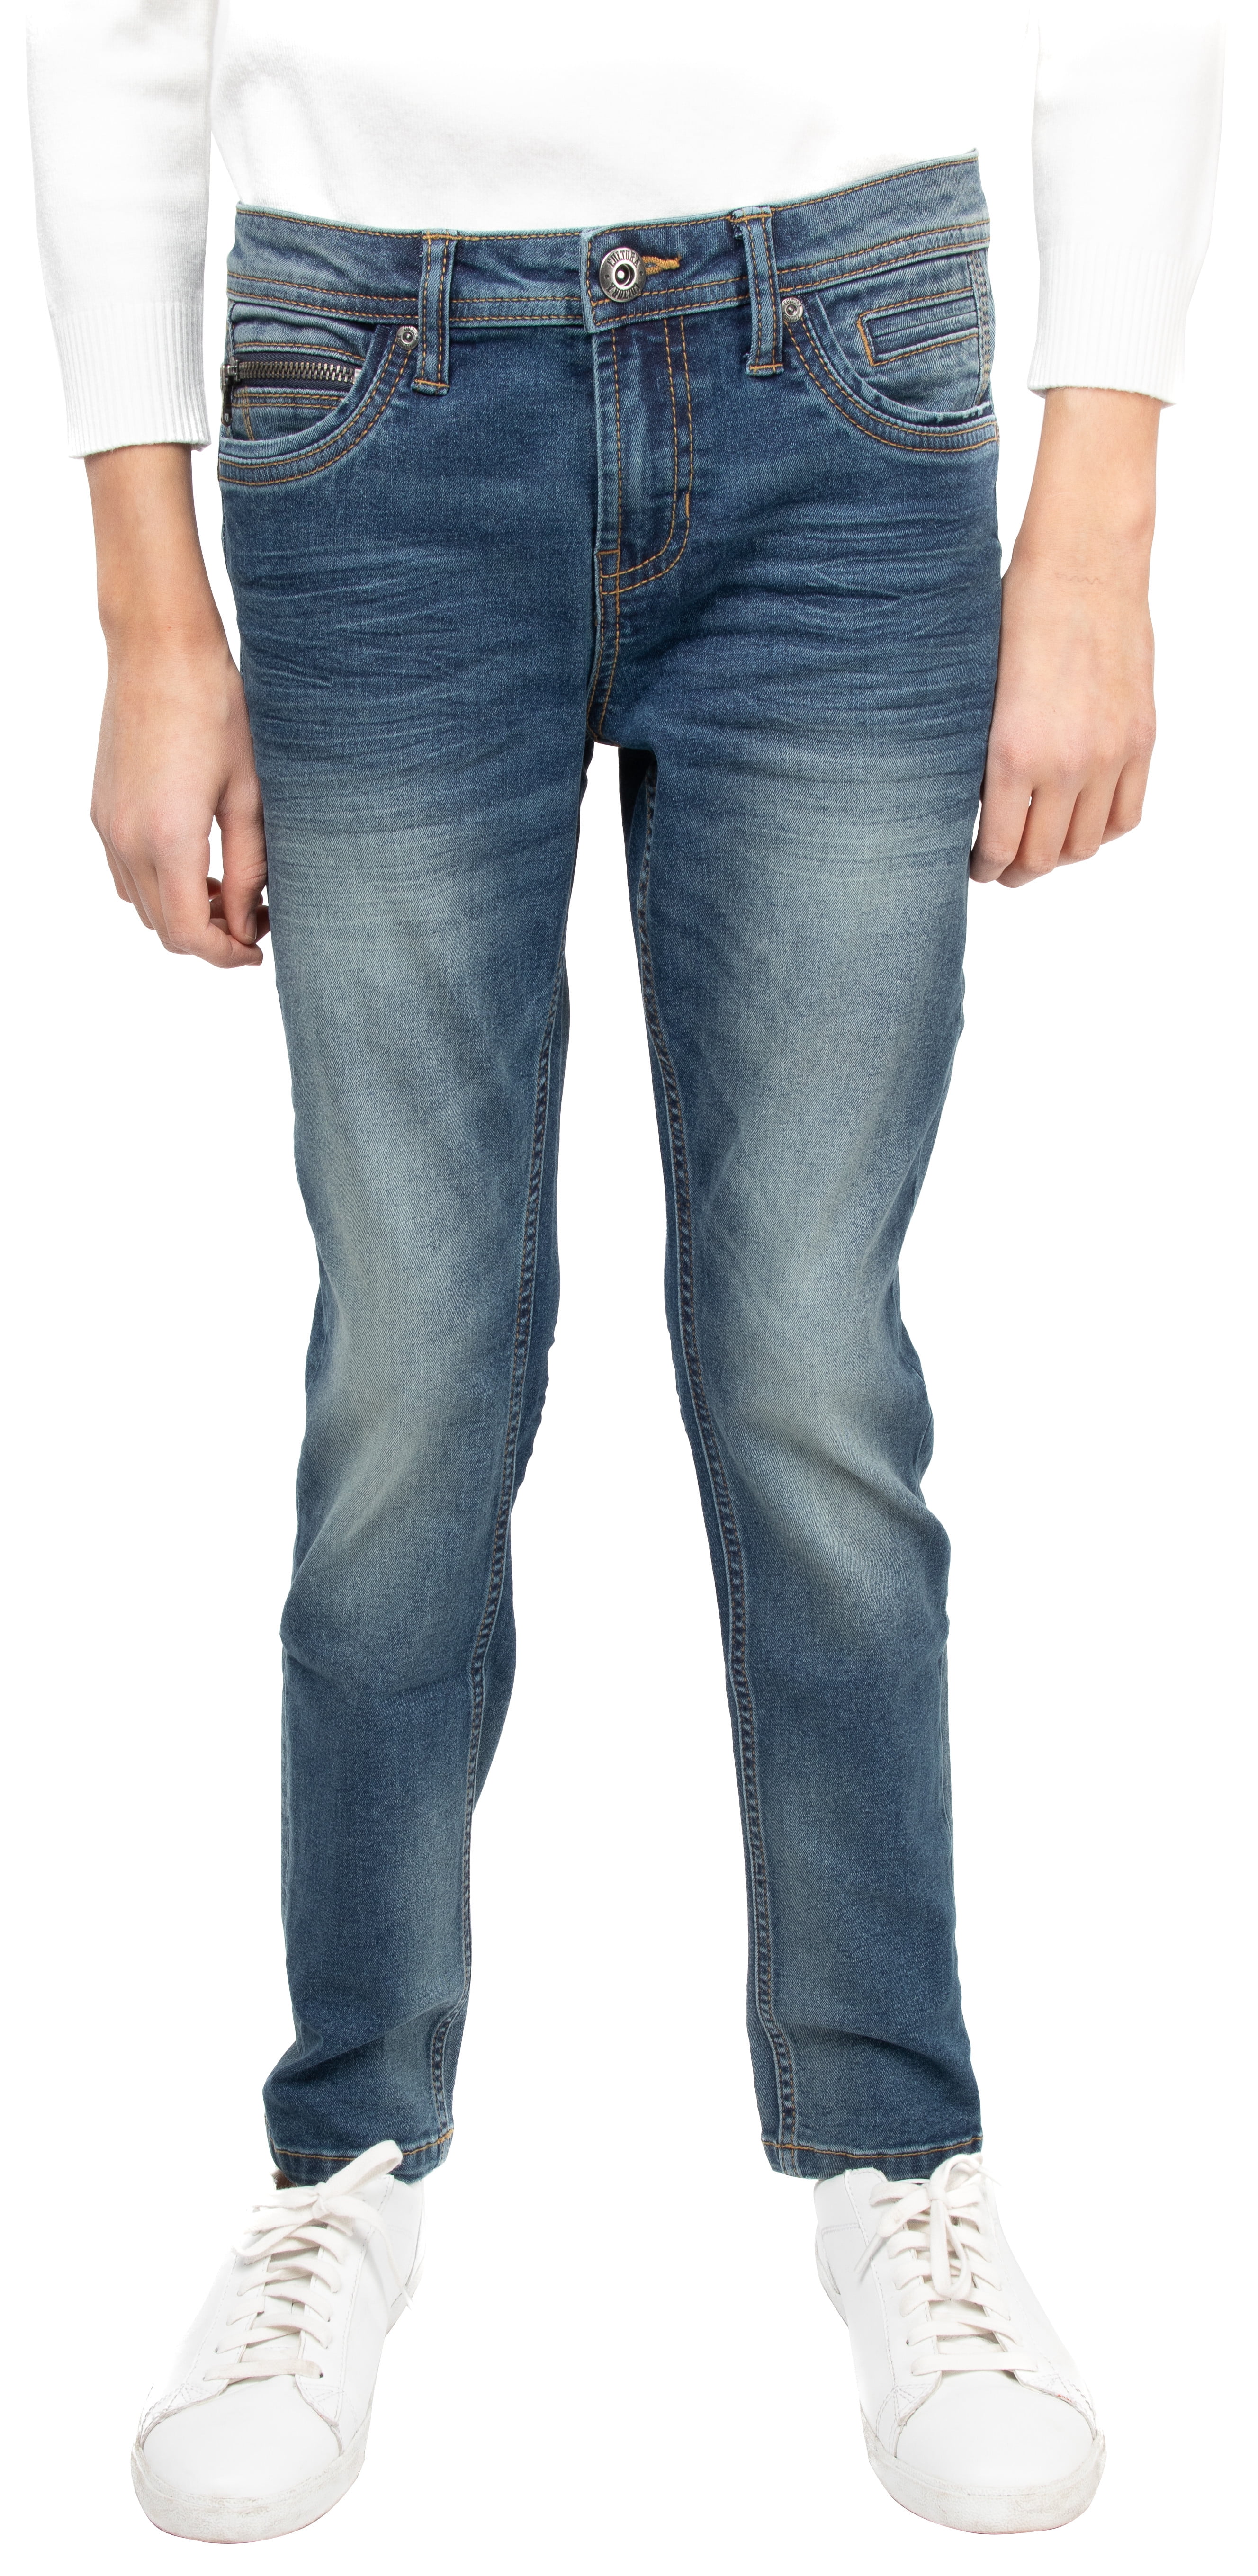 CULTURA Slim Fit Jeans for Boys Big Boys Teens Slim Wash Denim Pants, Tint,  Watch Pocket with Zipper 